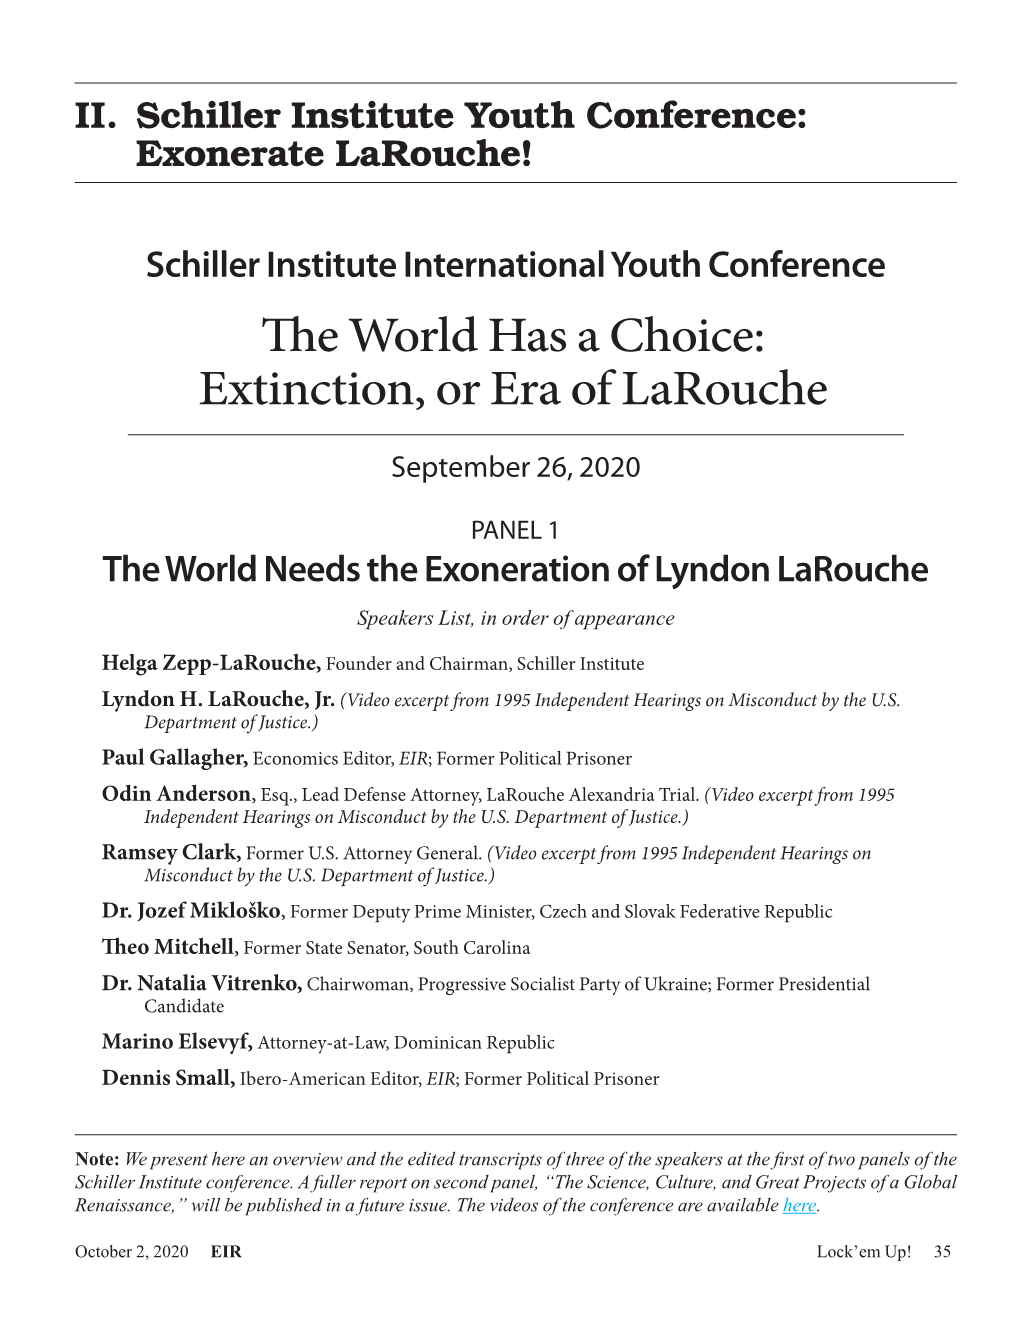 The World Has a Choice: Extinction, Or Era of Larouche